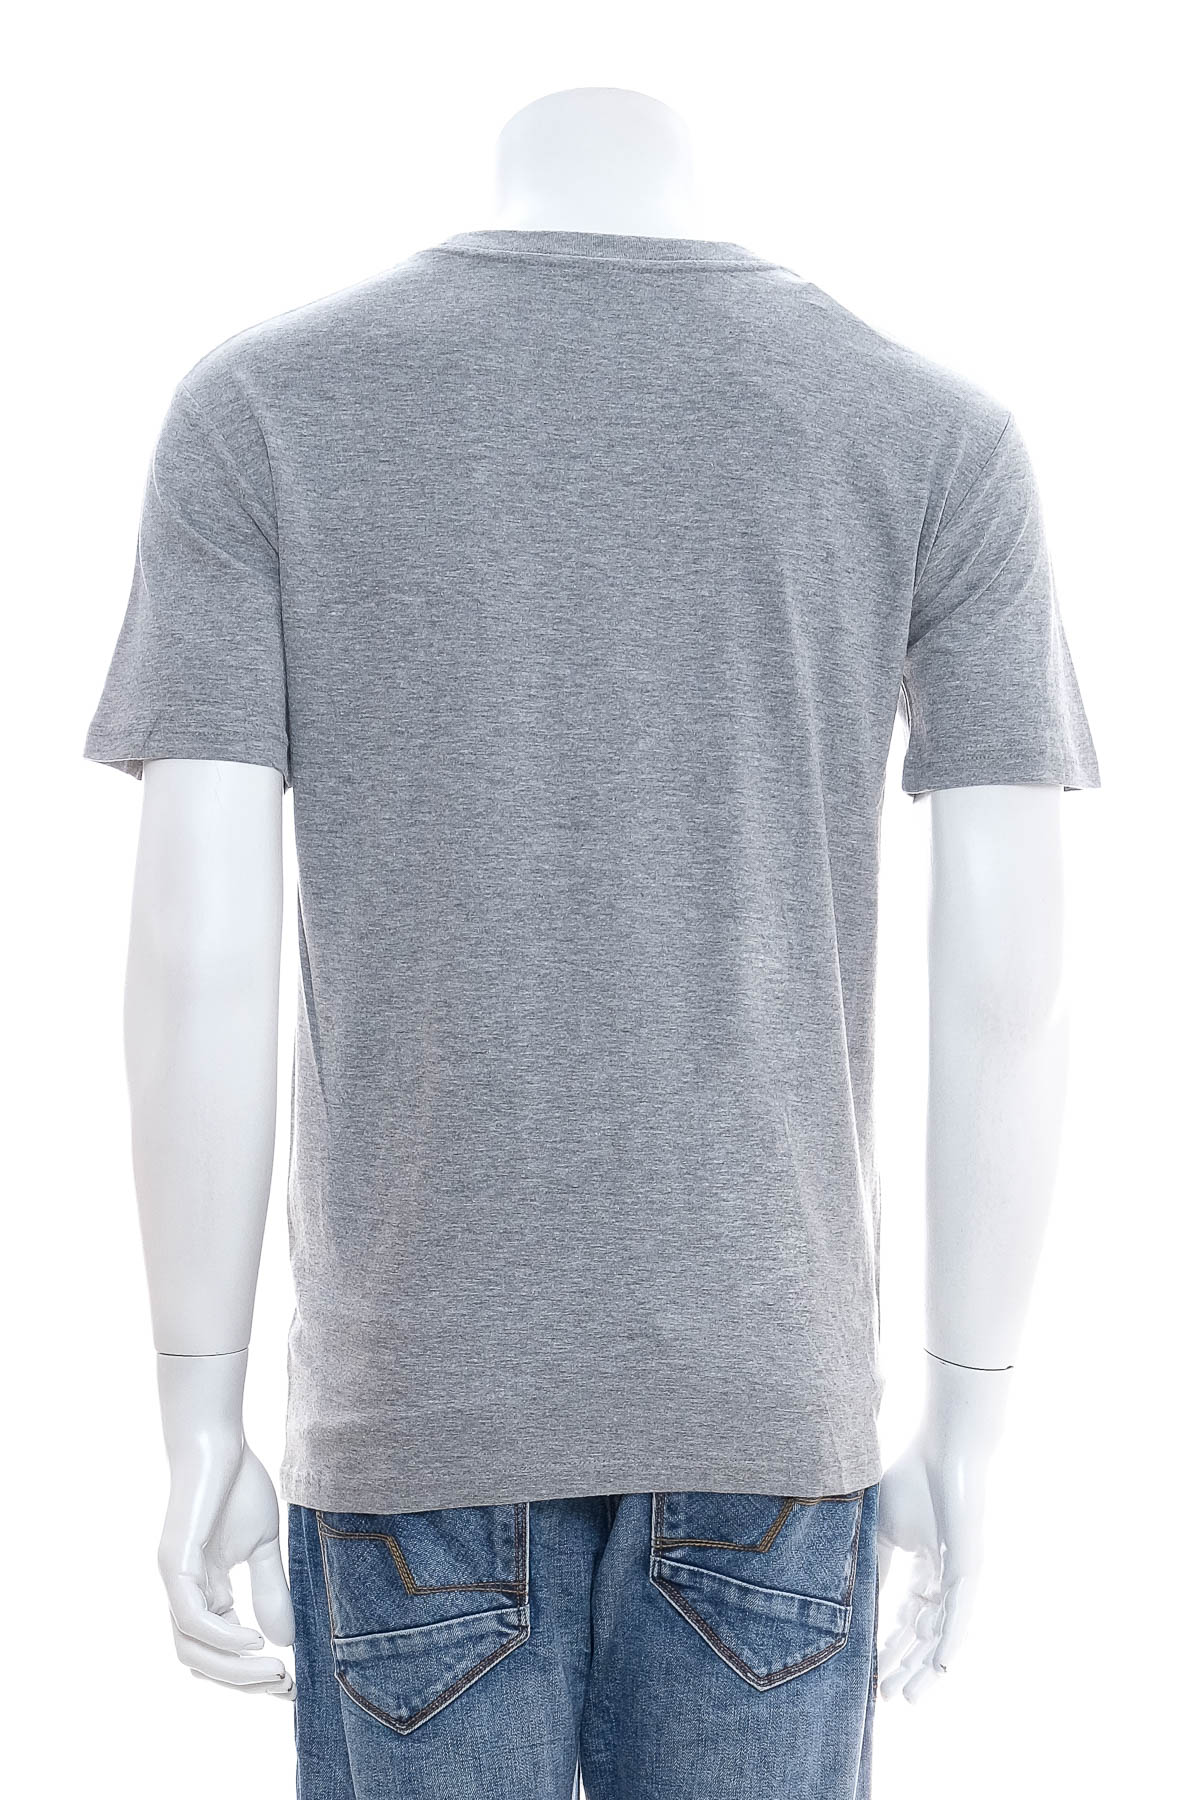 Men's T-shirt - Stedman - 1